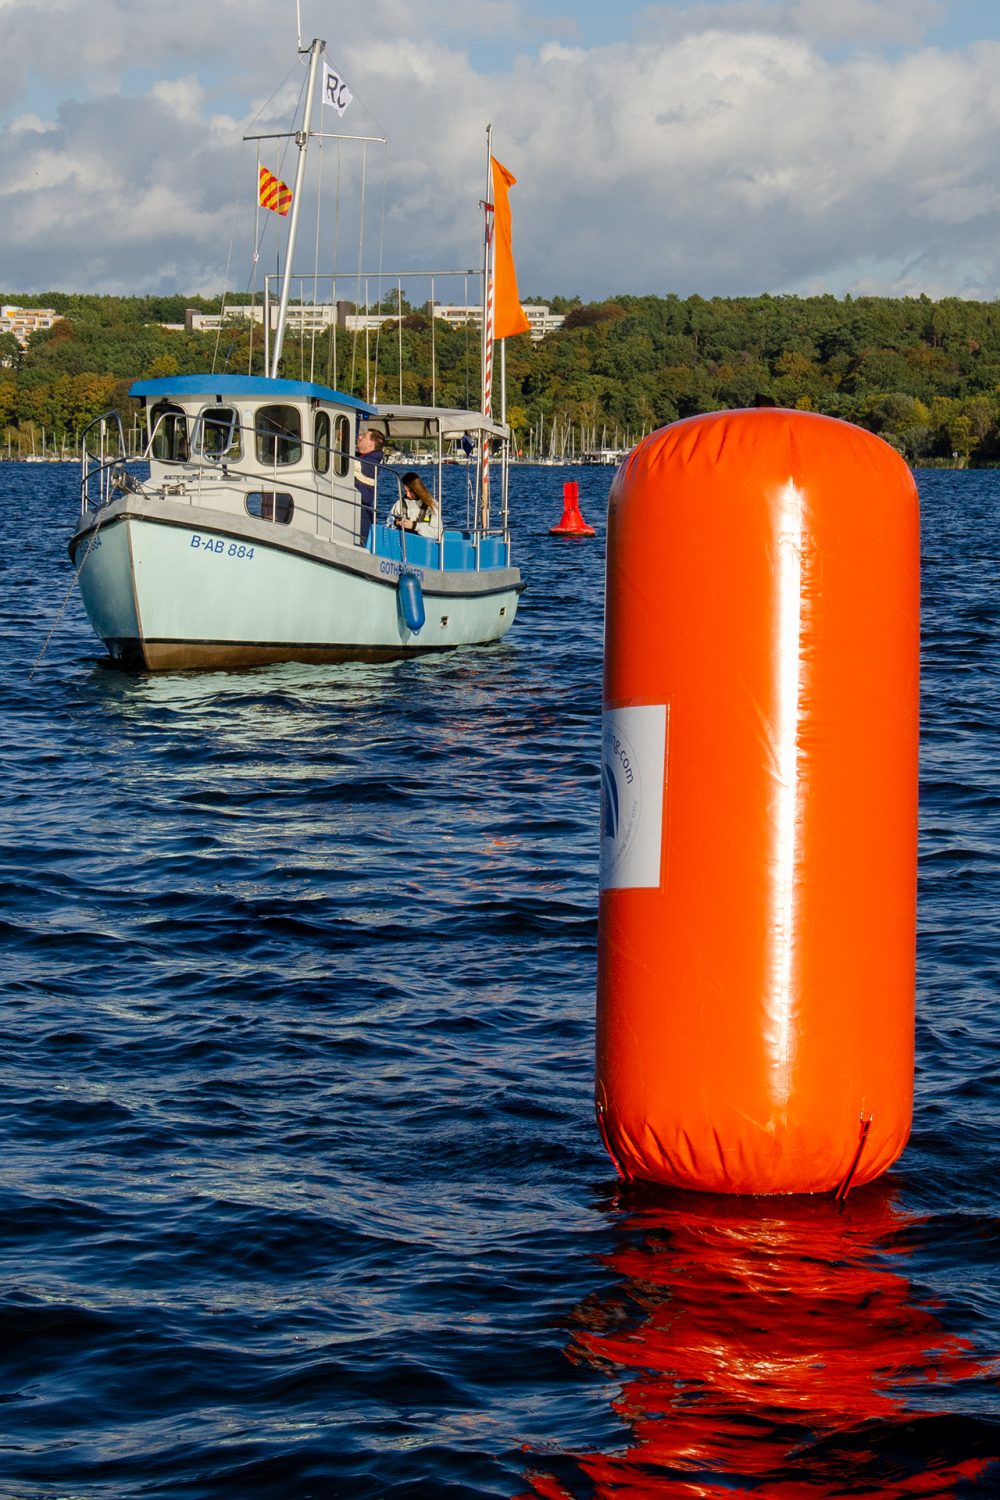 Racing mark / regatta buoy for regatta sailing, orange cylinder, inflatable, with number